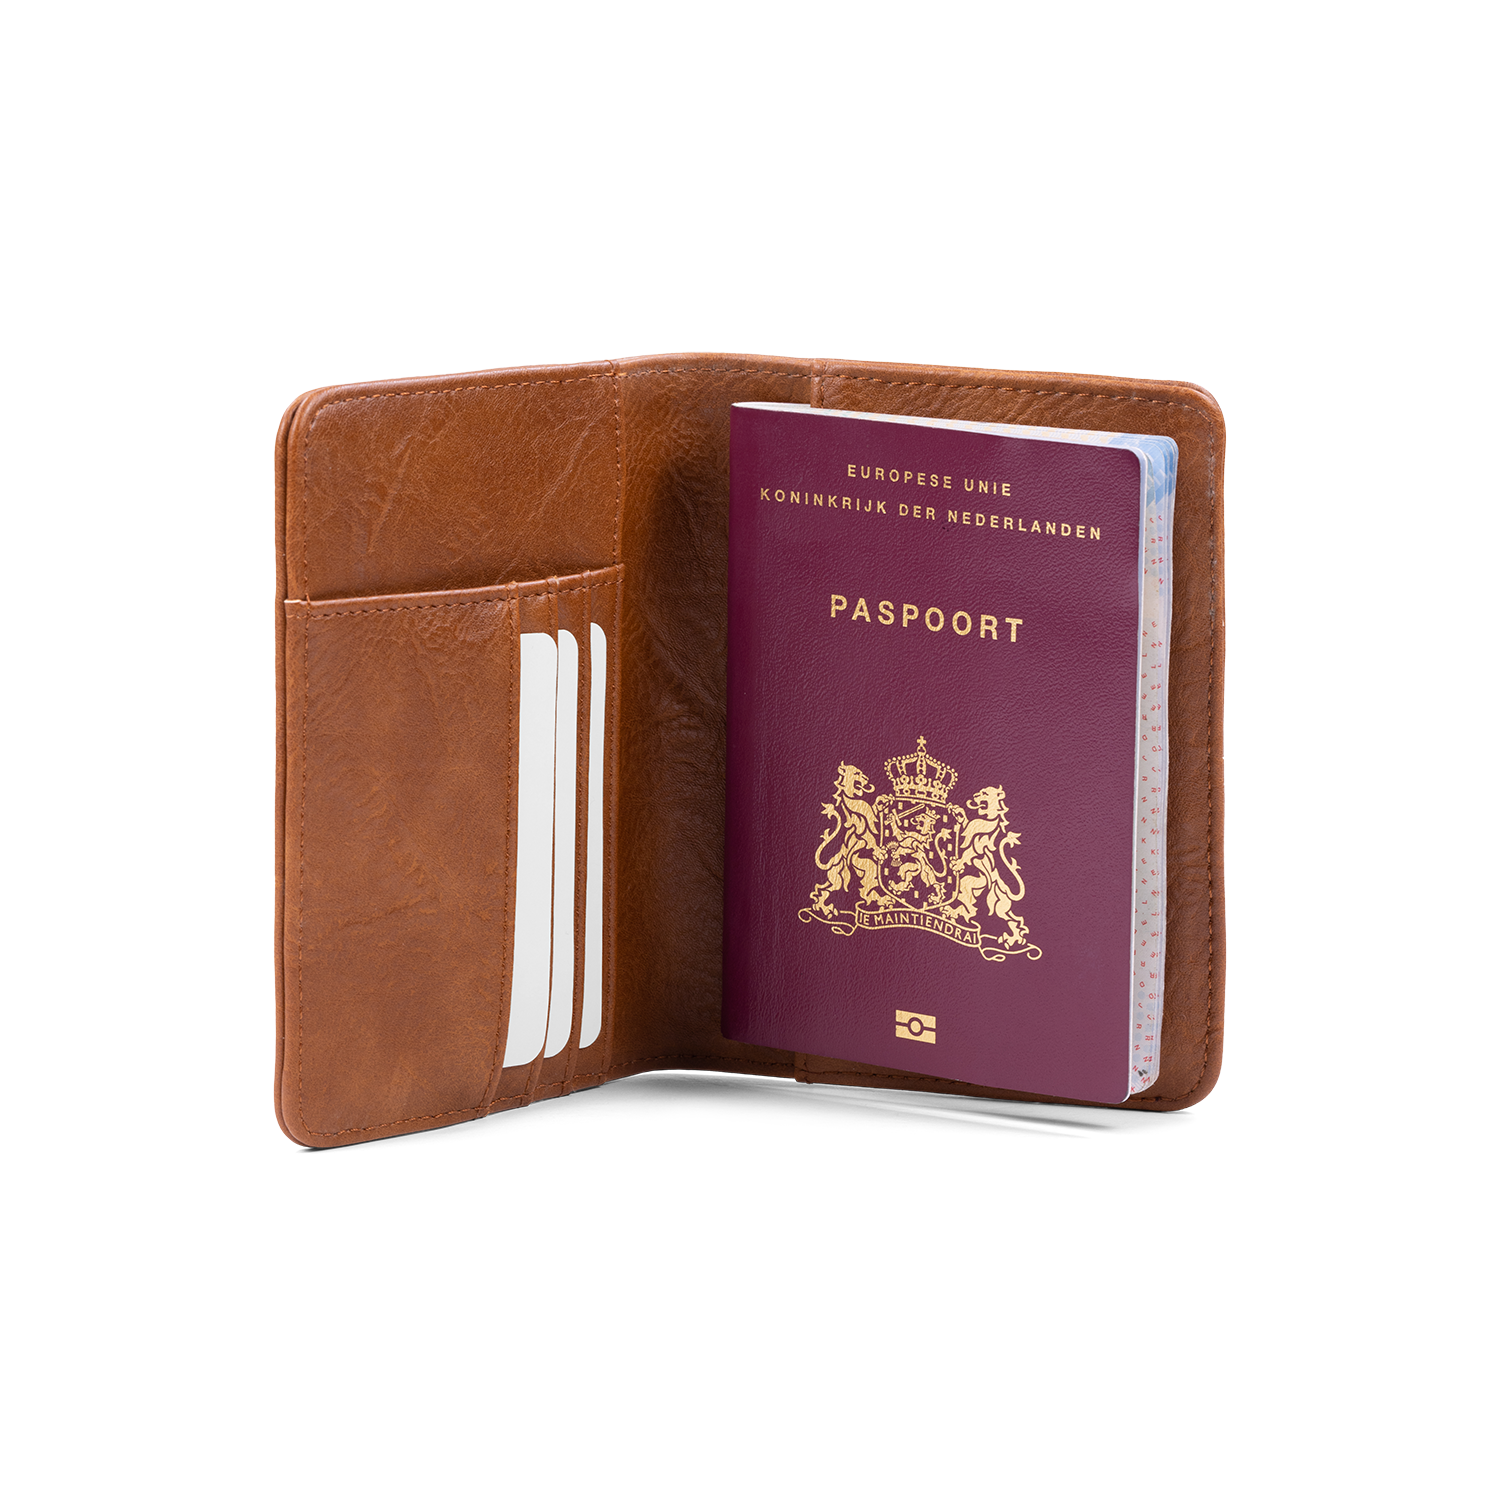 Fab Seventies - Burned Caramel - Passport Holder